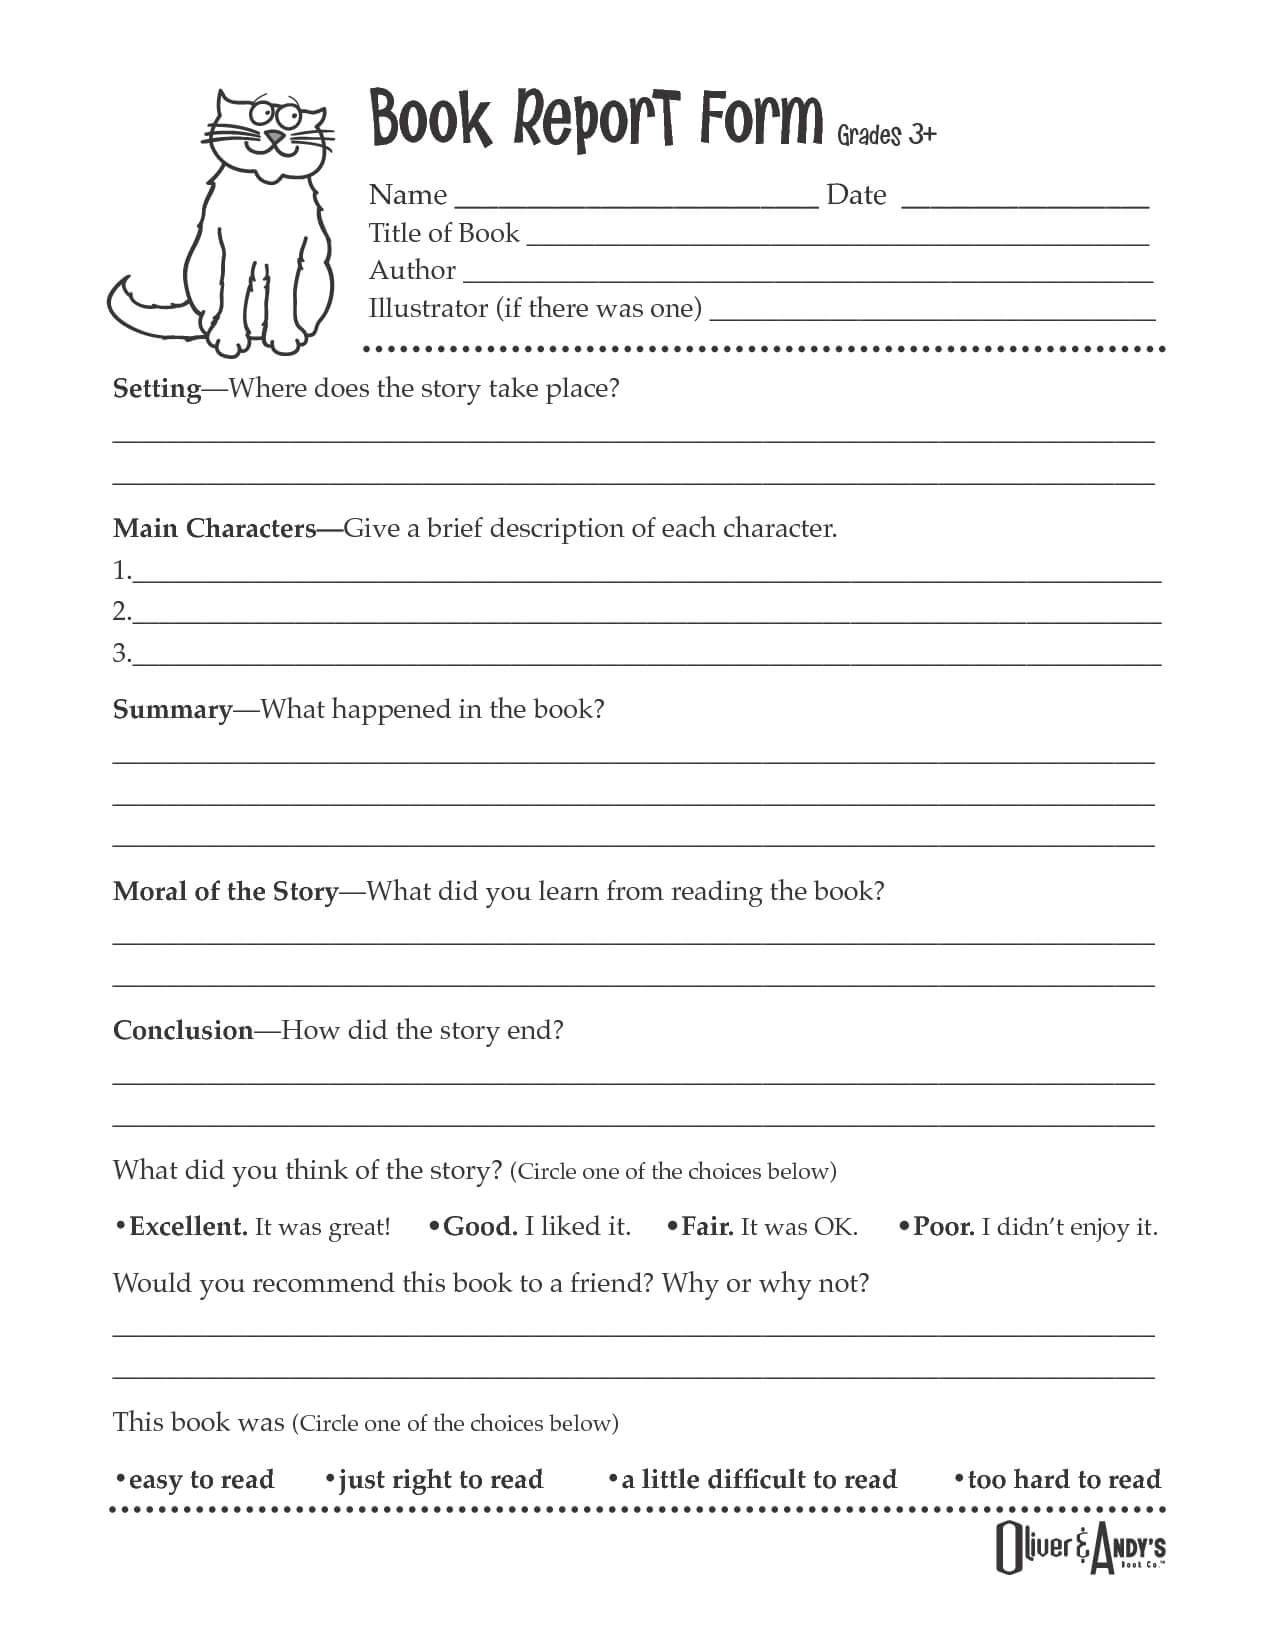 Second Grade Book Report Template | Book Report Form Grades With Second Grade Book Report Template